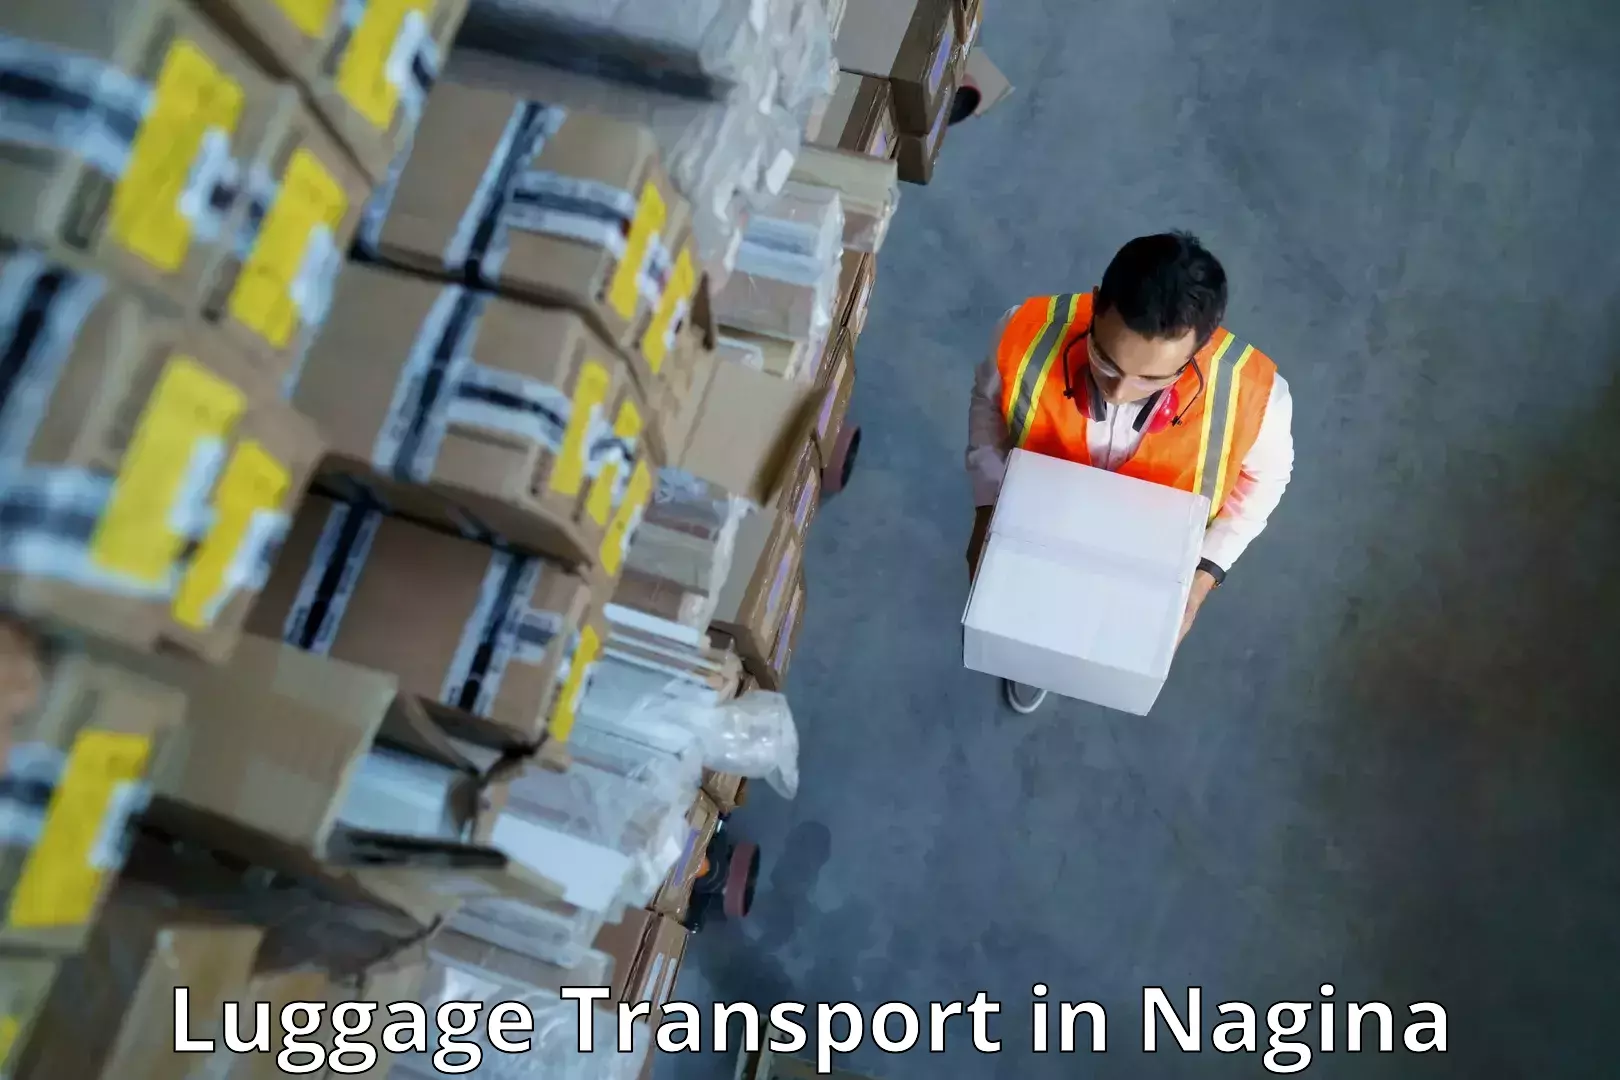 Luggage transport consultancy in Nagina